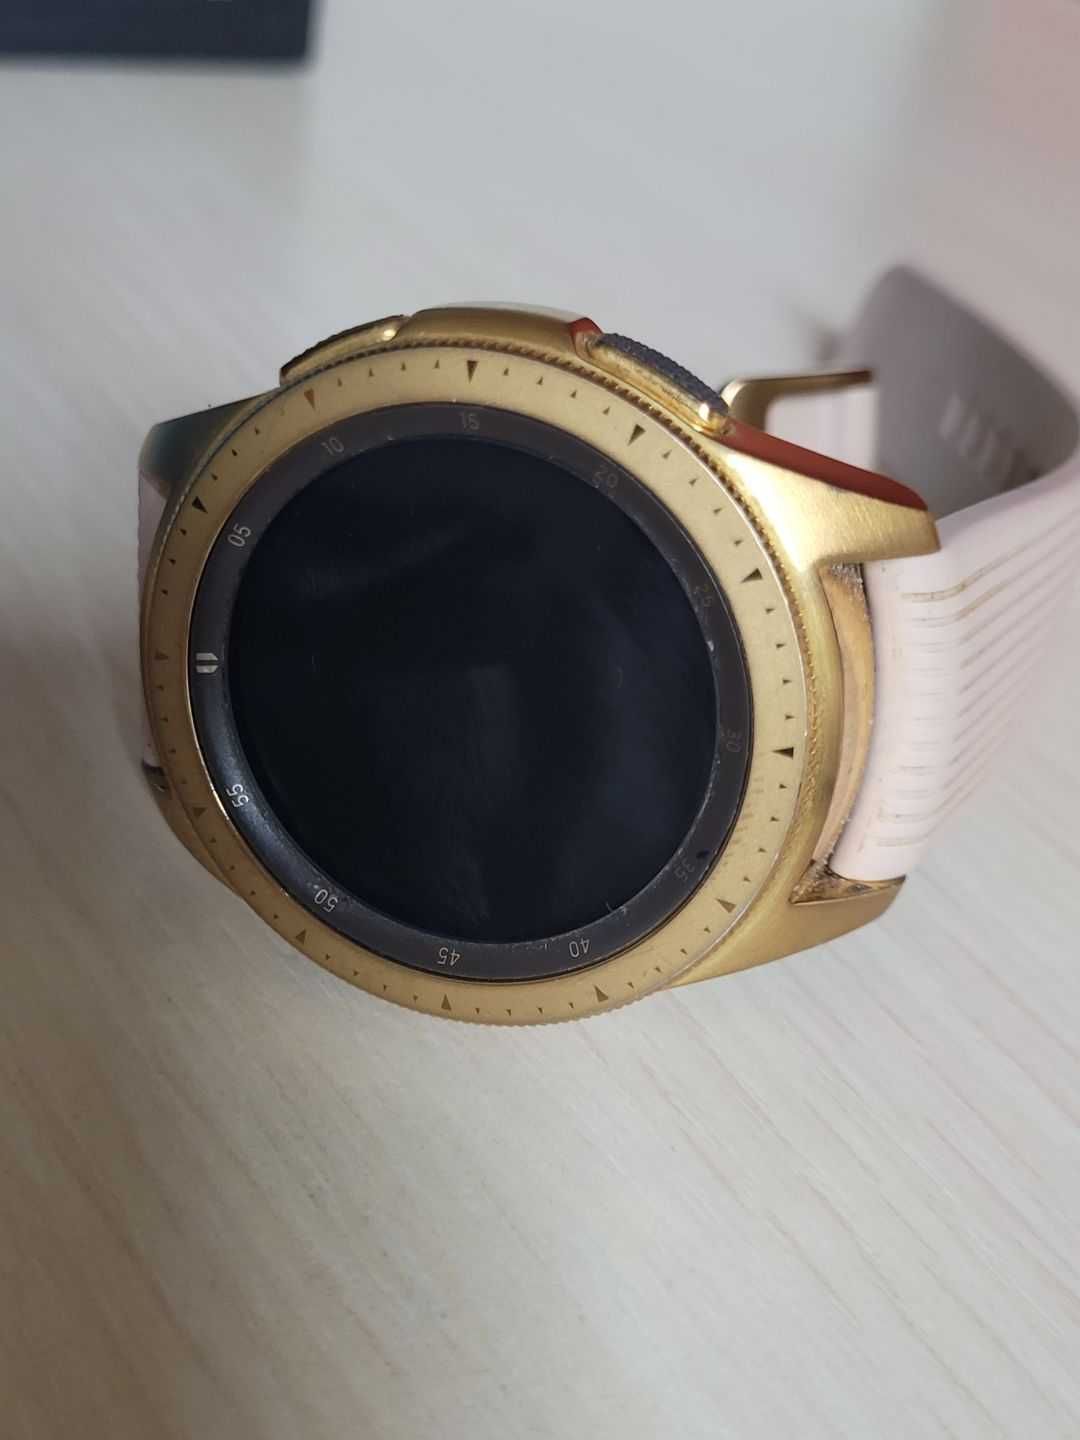 Samsung Galaxy Watch 42mm (Уральск 0702) лот 333743